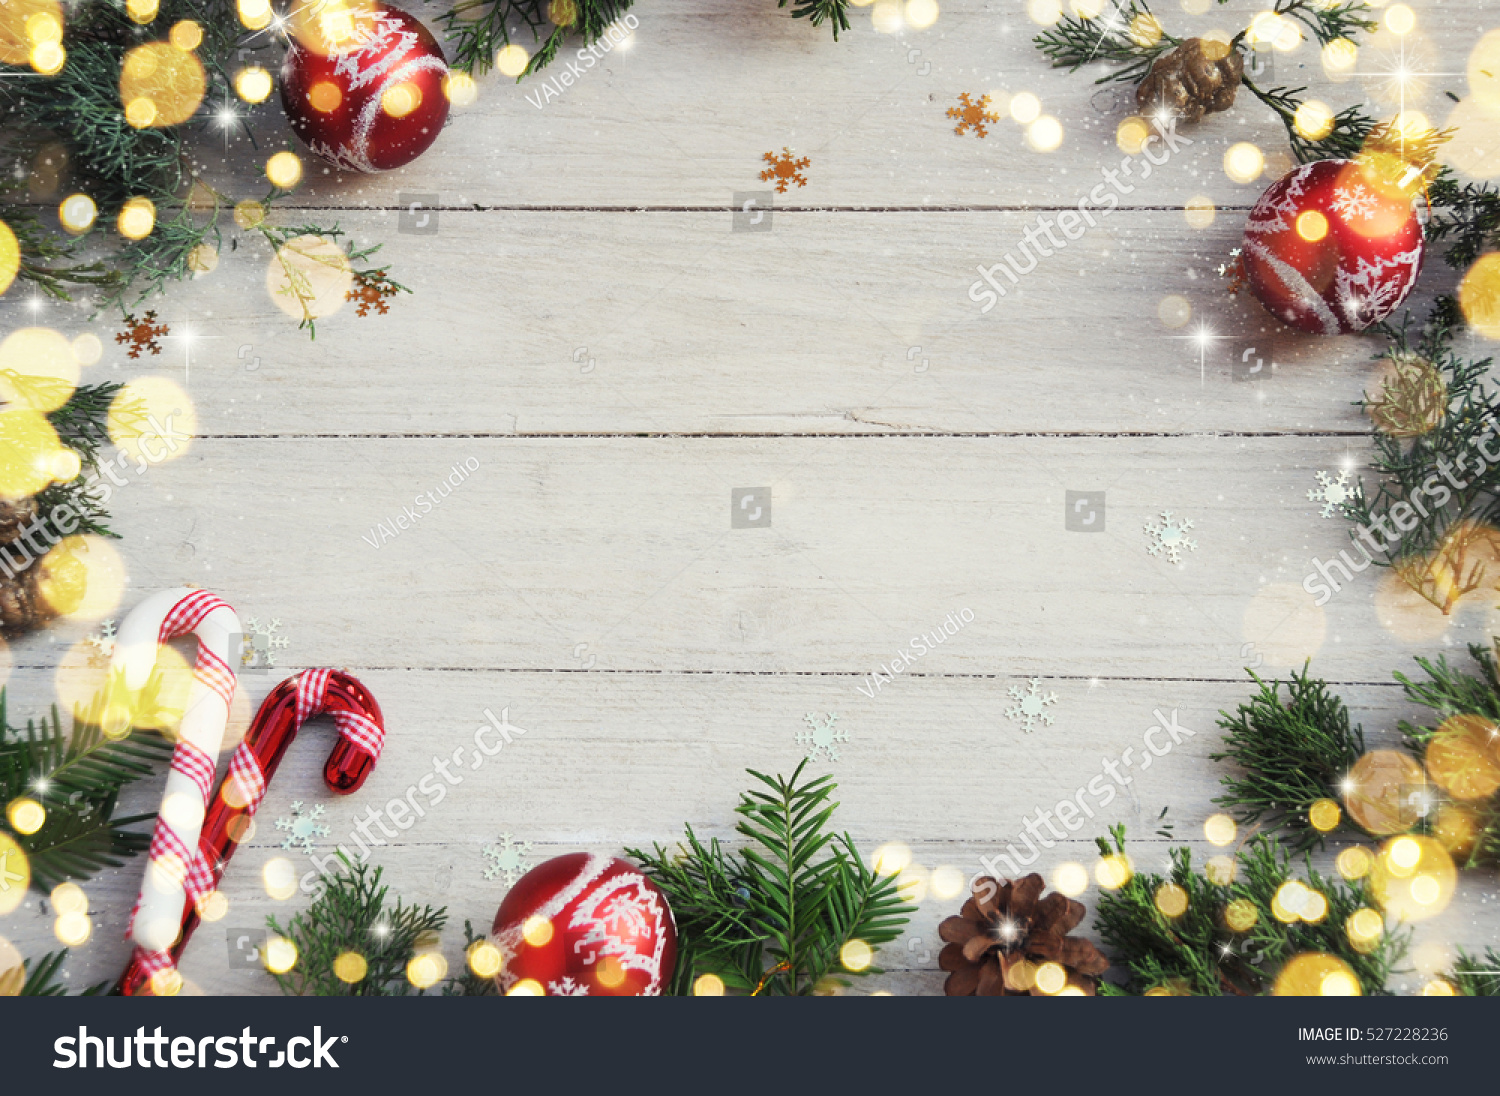 Christmas Background On White Wooden Desk Stock Photo 527228236 ...